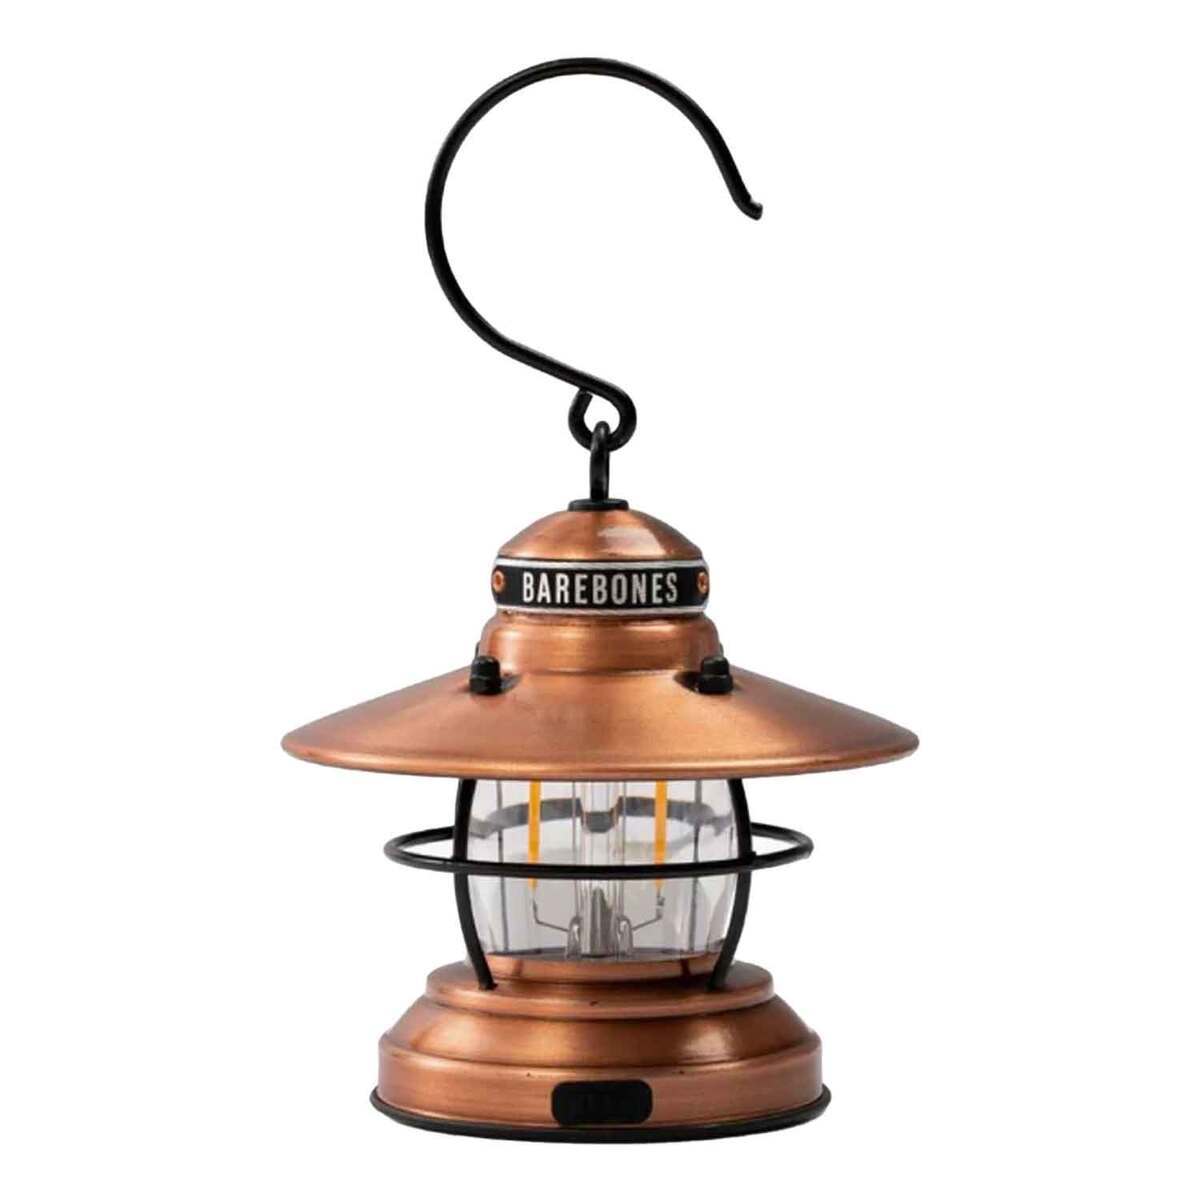 https://www.sportsmans.com/medias/barebones-edison-mini-electric-lantern-3pk-copper-1741427-1.jpg?context=bWFzdGVyfGltYWdlc3w0MTM3MHxpbWFnZS9qcGVnfGg0OS9oN2UvMTA1MDU3MDMxMjkxMTgvMTc0MTQyNy0xX2Jhc2UtY29udmVyc2lvbkZvcm1hdF8xMjAwLWNvbnZlcnNpb25Gb3JtYXR8NjEzYmRmZDU3NjJjNTI4Nzc4YjAwMmM1ZjYyMzIyNzJlZTAyNzgyNGJjMTFmOWRjYTg2ZTg2MjcxODE0N2IxNA